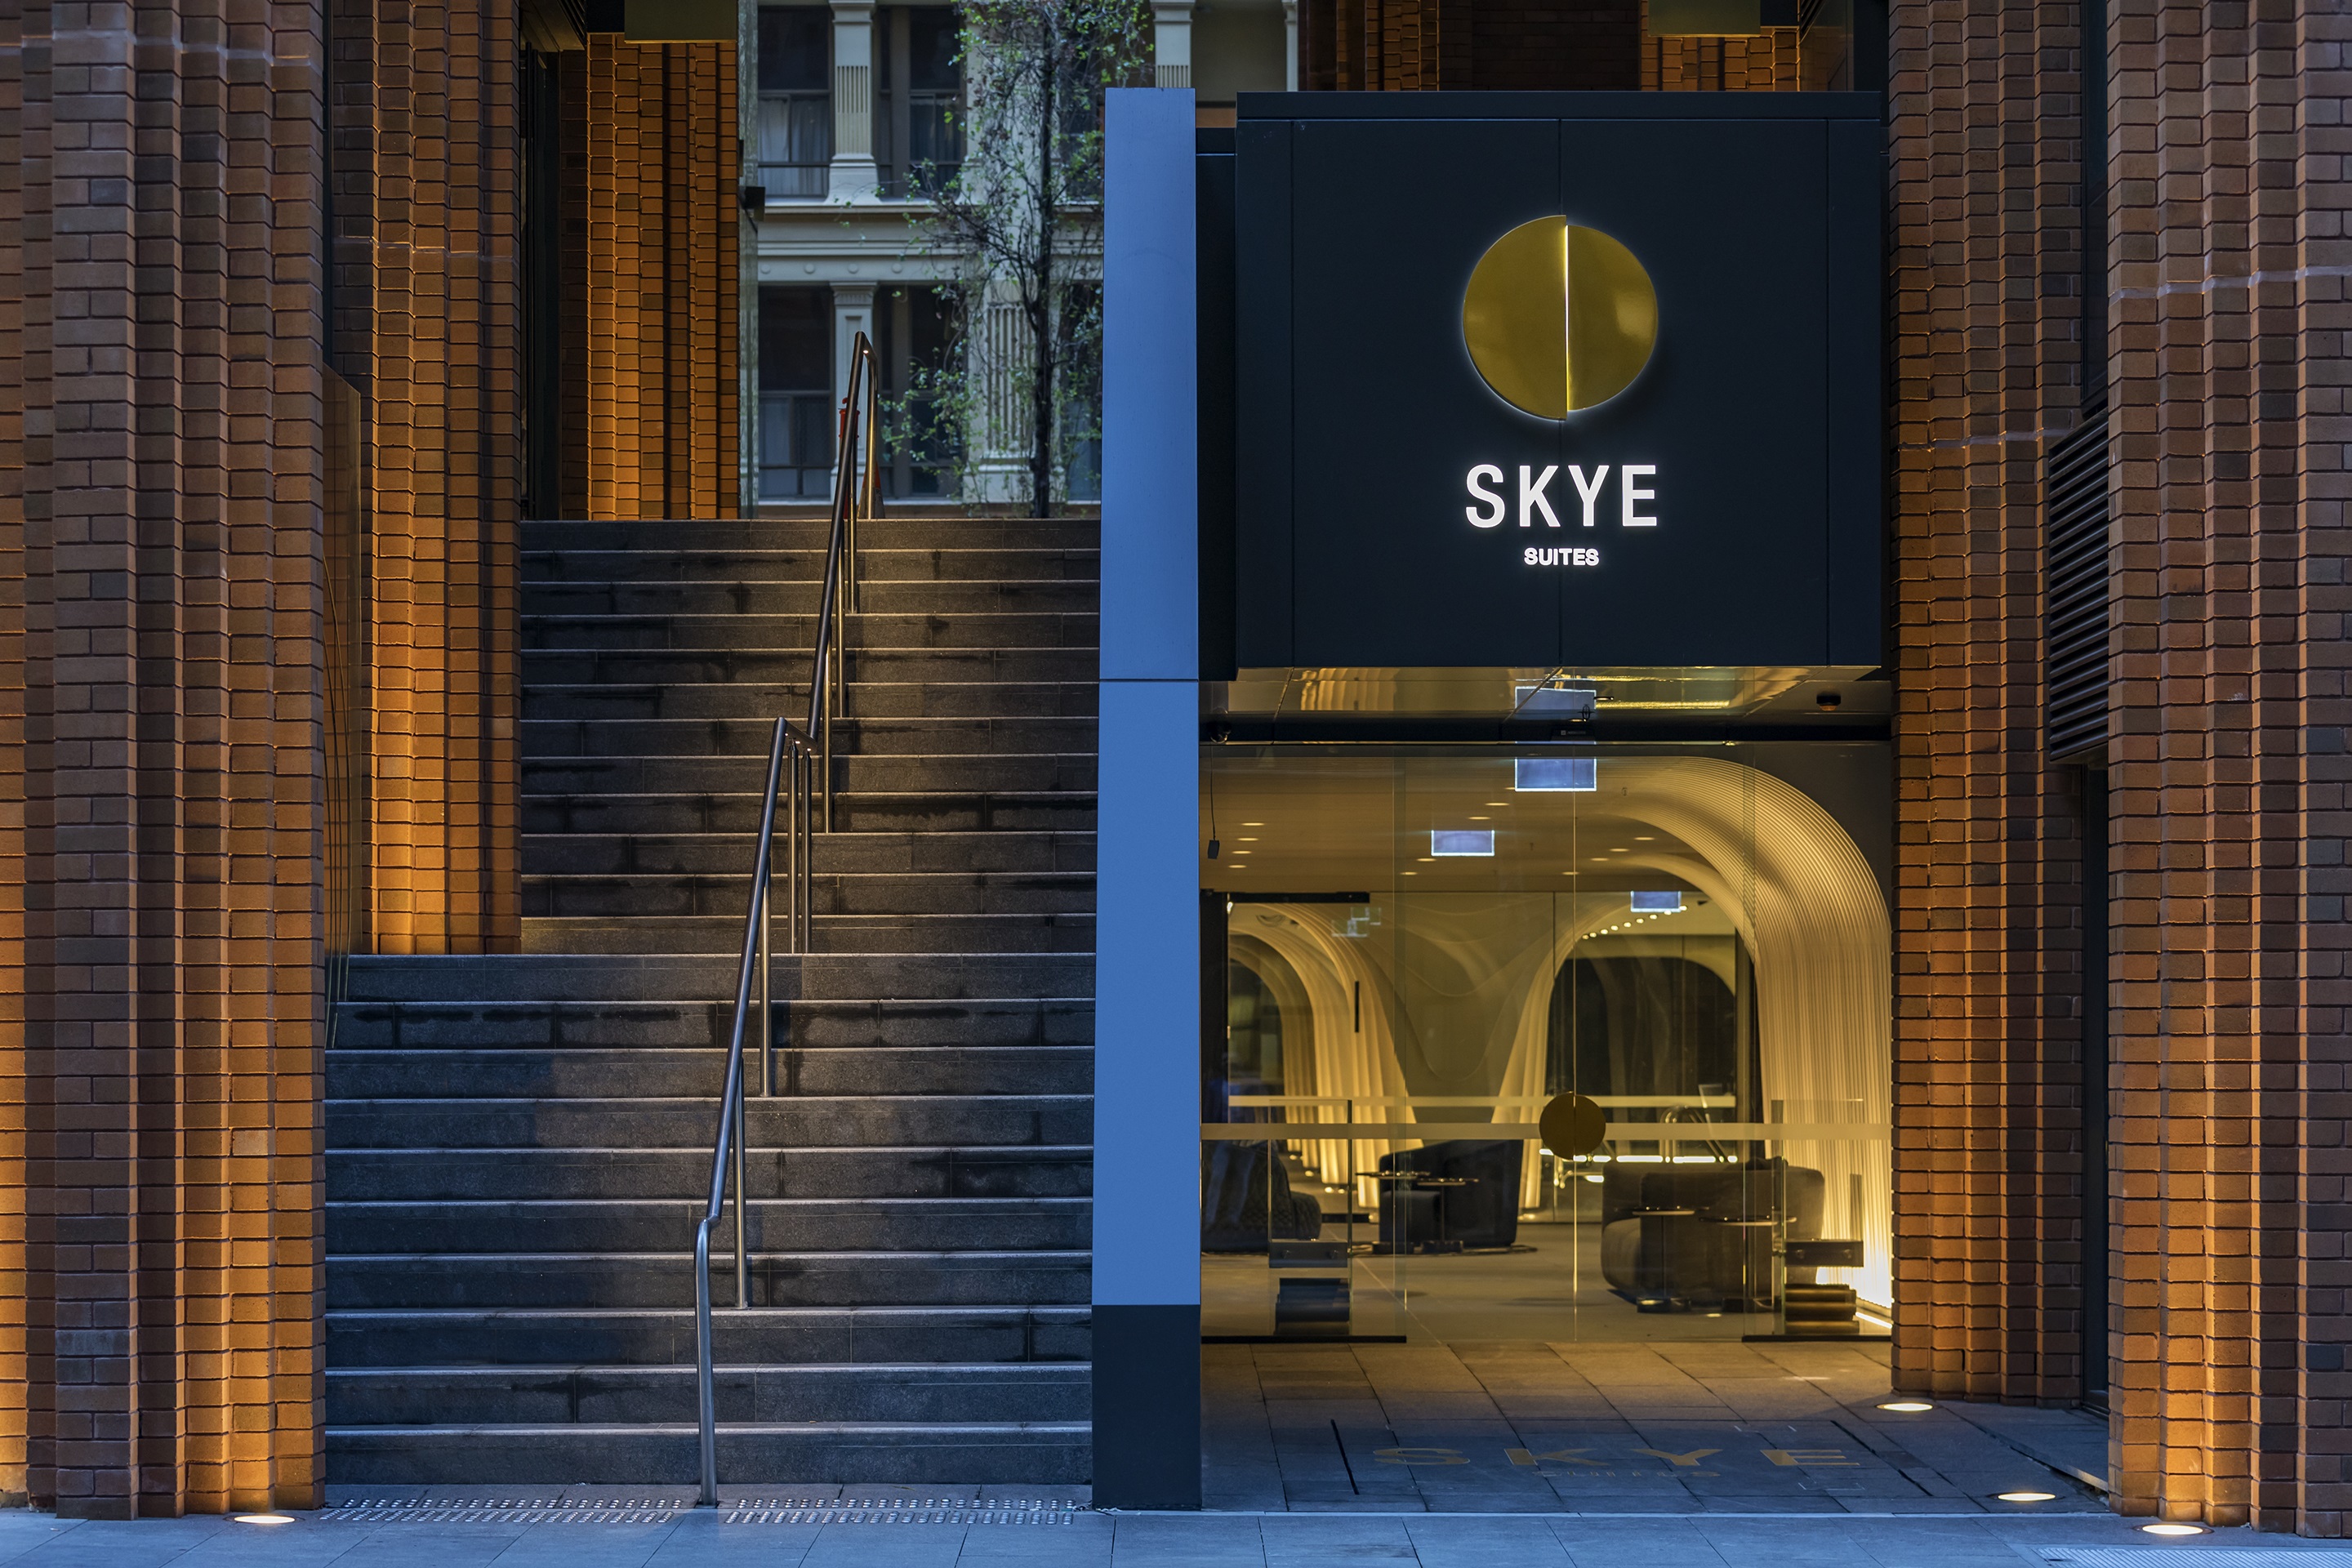 SKYE Suites Sydney Launch 2 悉尼最新精品酒店 SKYE套房酒店盛大开业